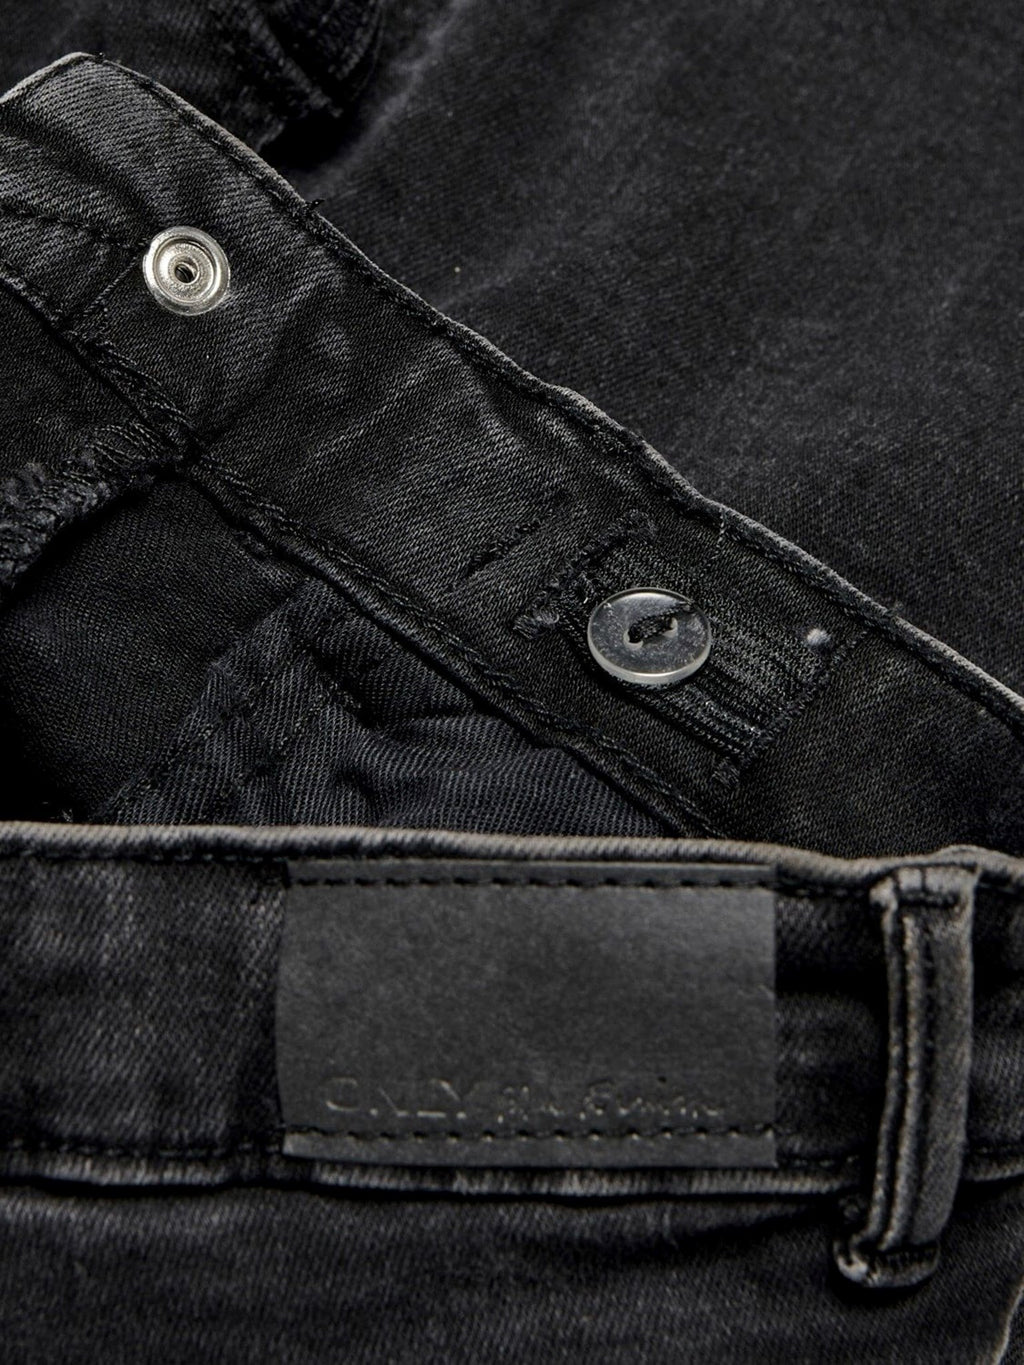 Paola jeans - Sort-grå denim